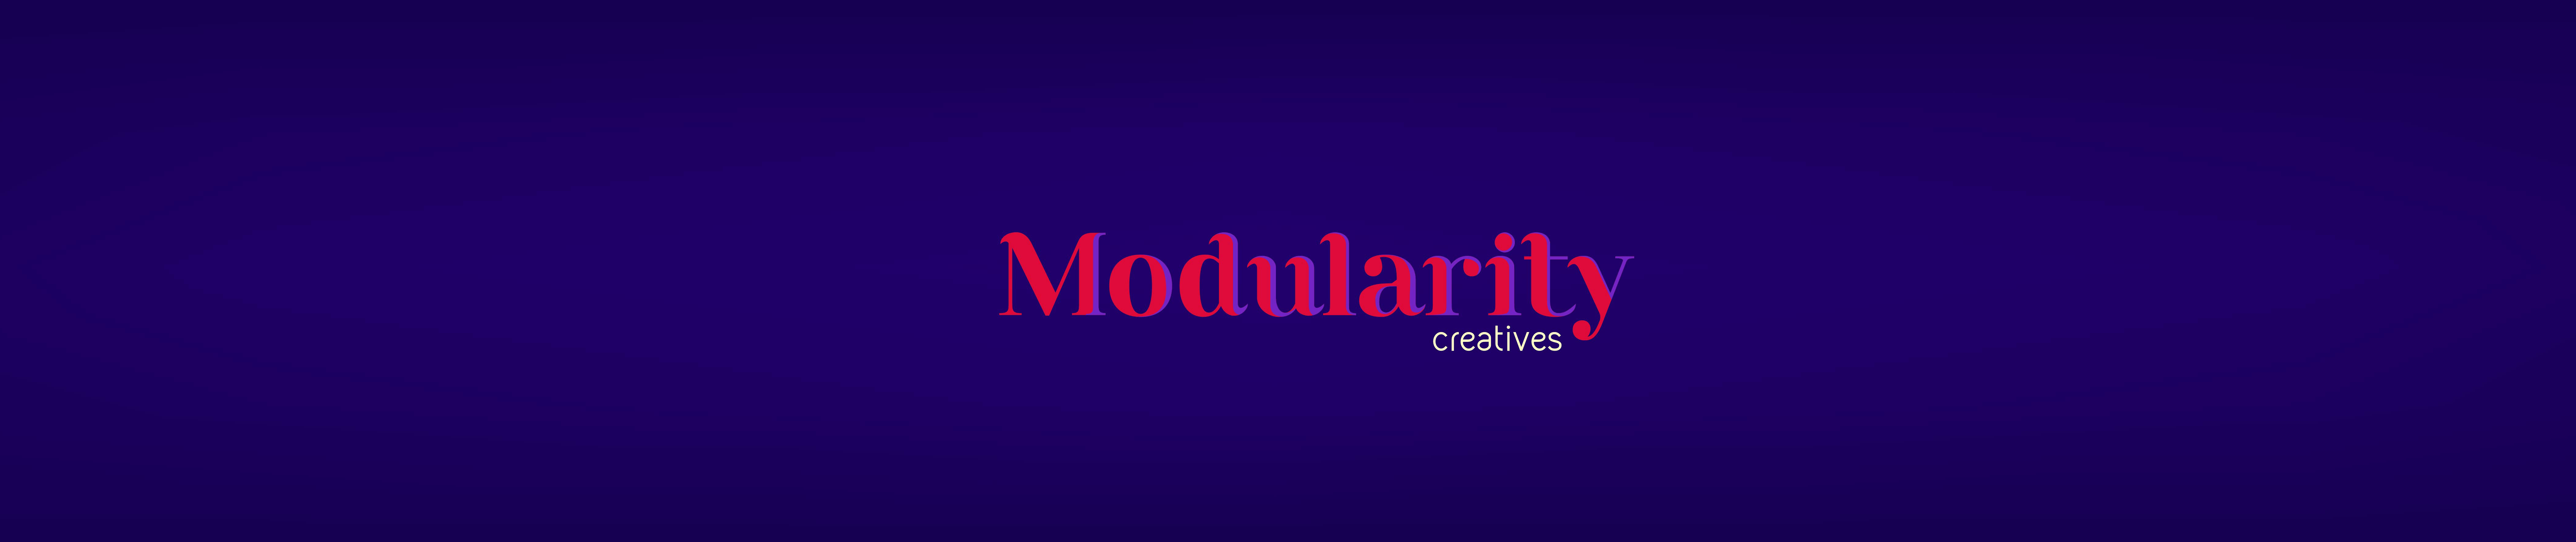 MODULARITY Creatives's profile banner